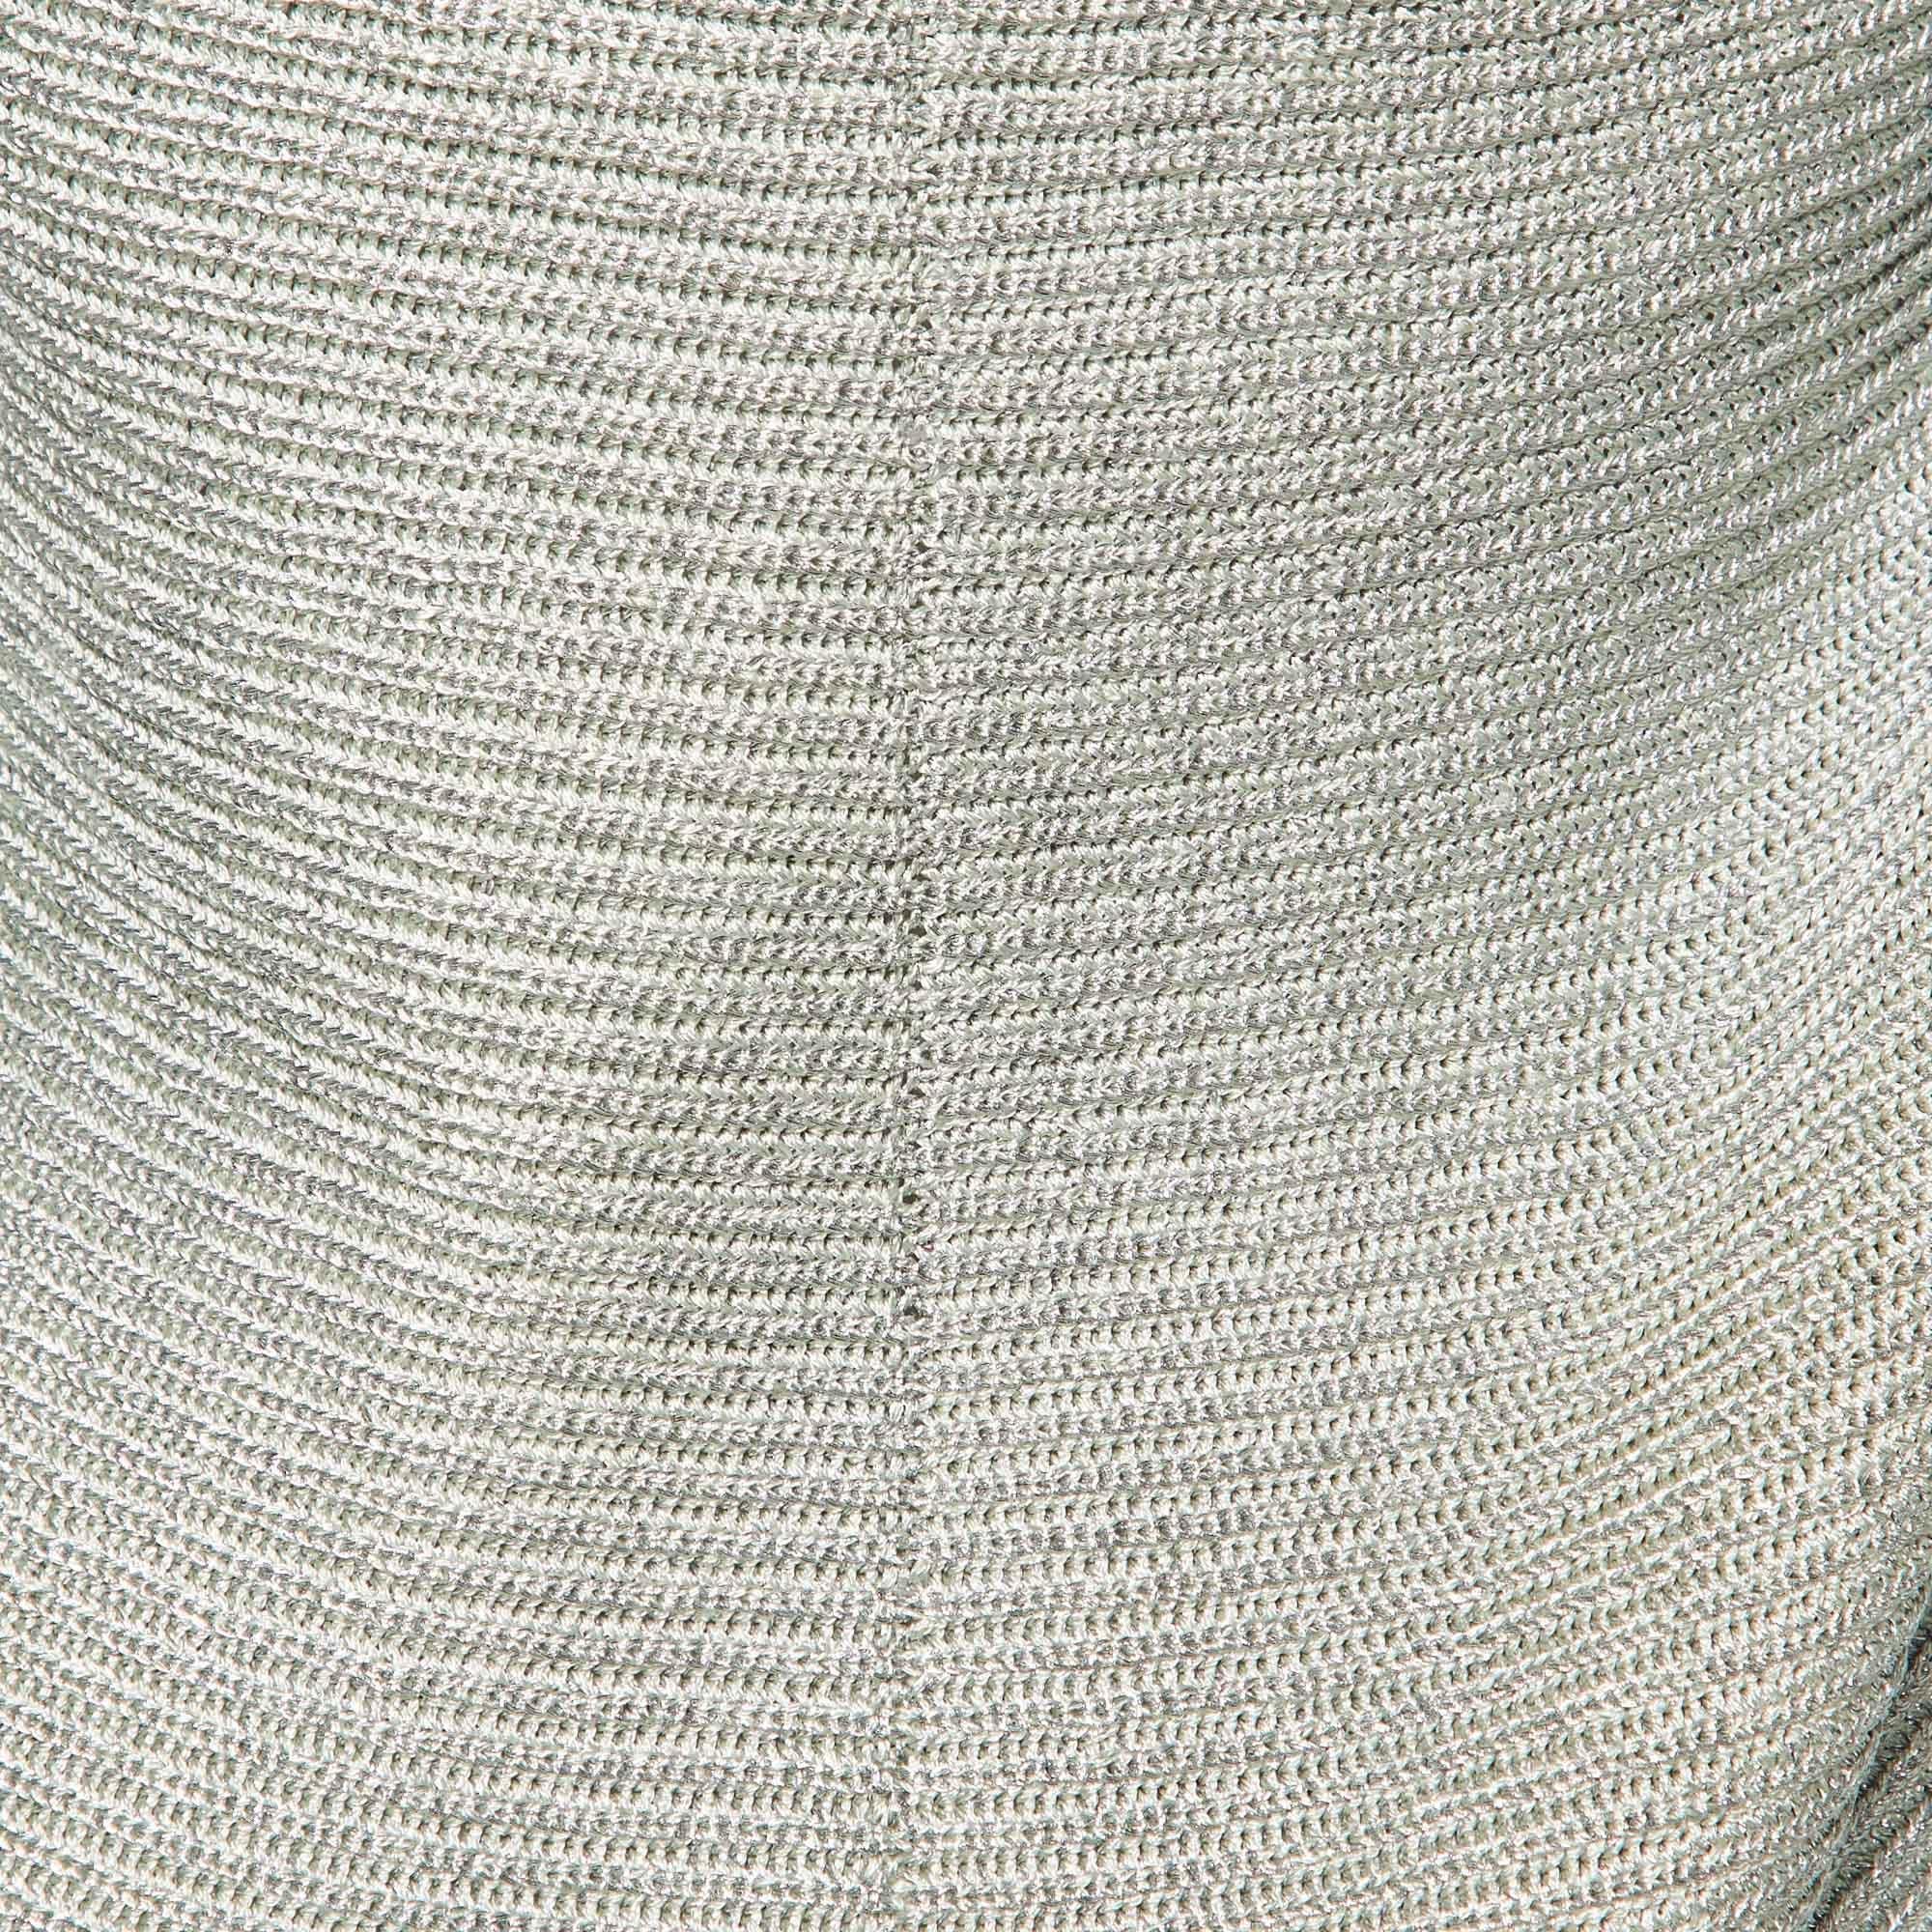 Ralph Lauren Silver Metallic Knit Circle Cardigan M In Excellent Condition For Sale In Dubai, Al Qouz 2